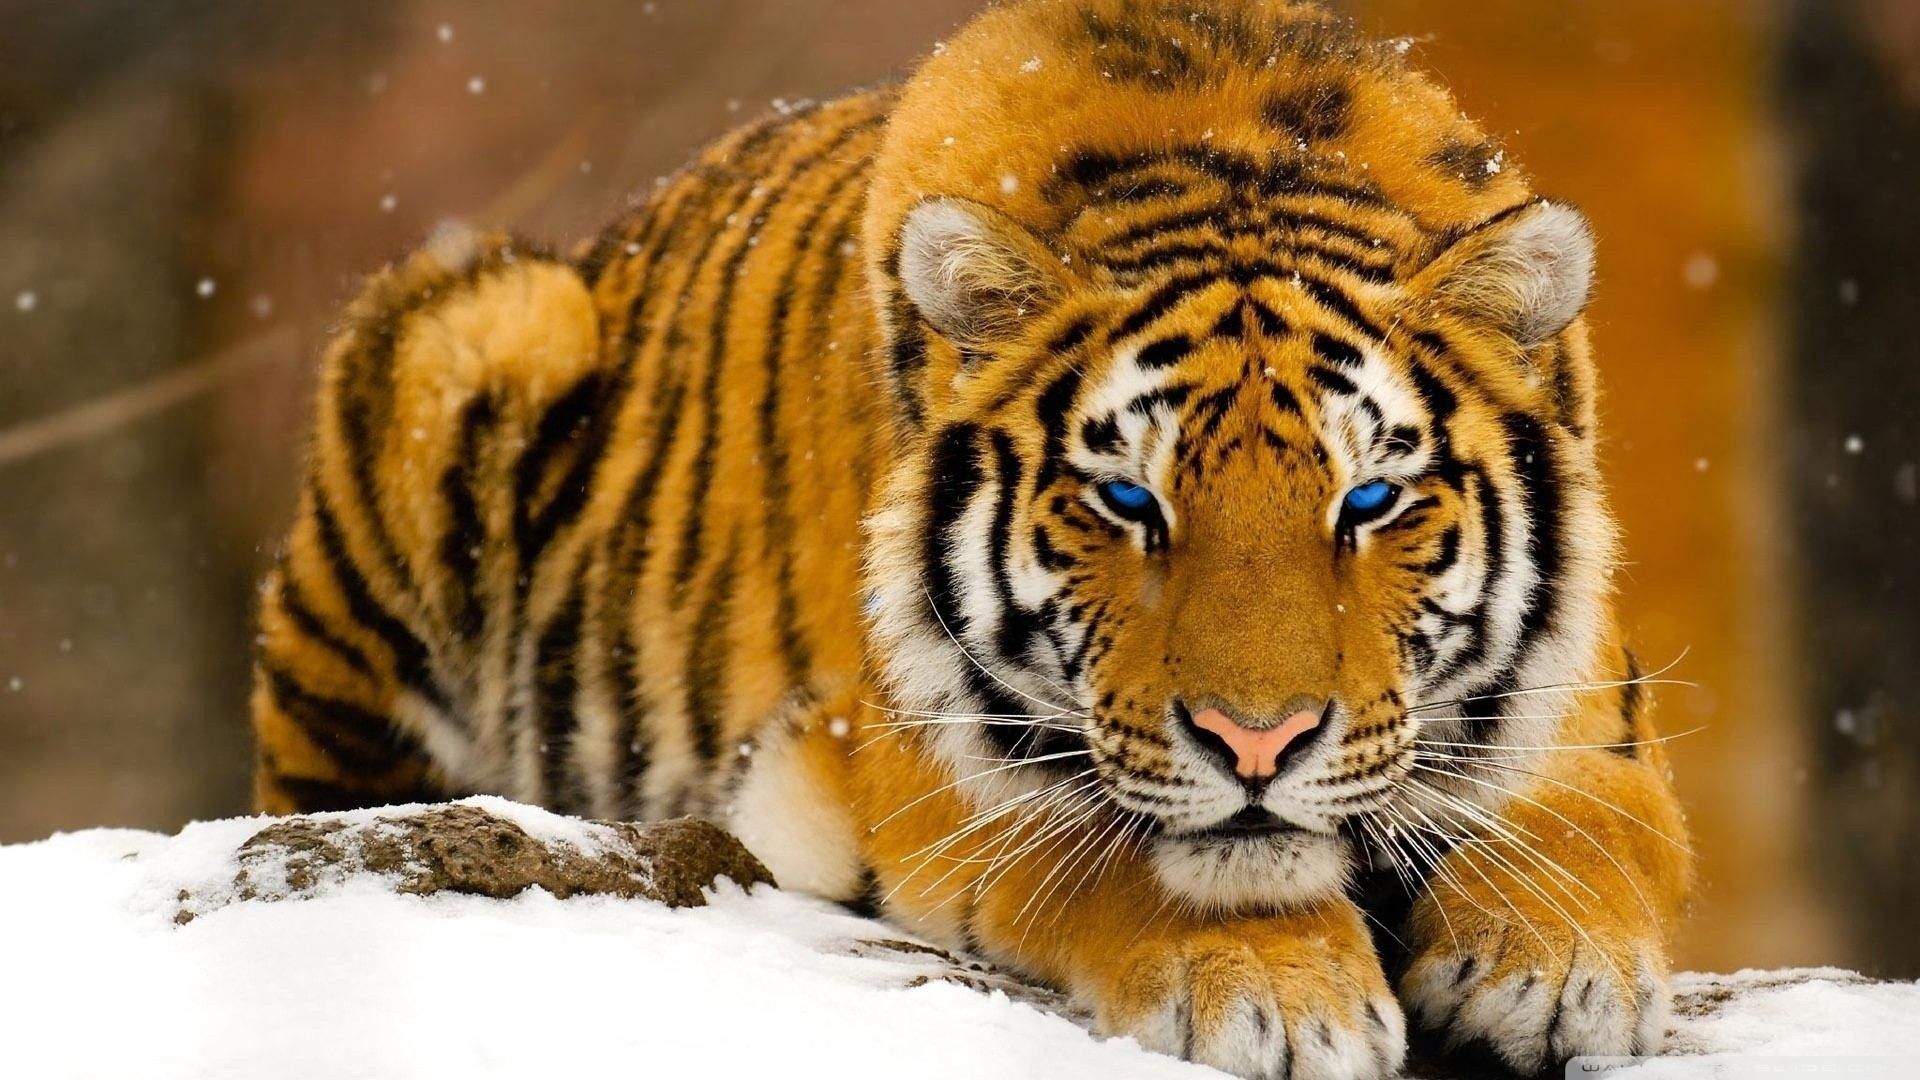 Tiger Wallpapers Free Download White Cute Cub Animal HD Desktop Images